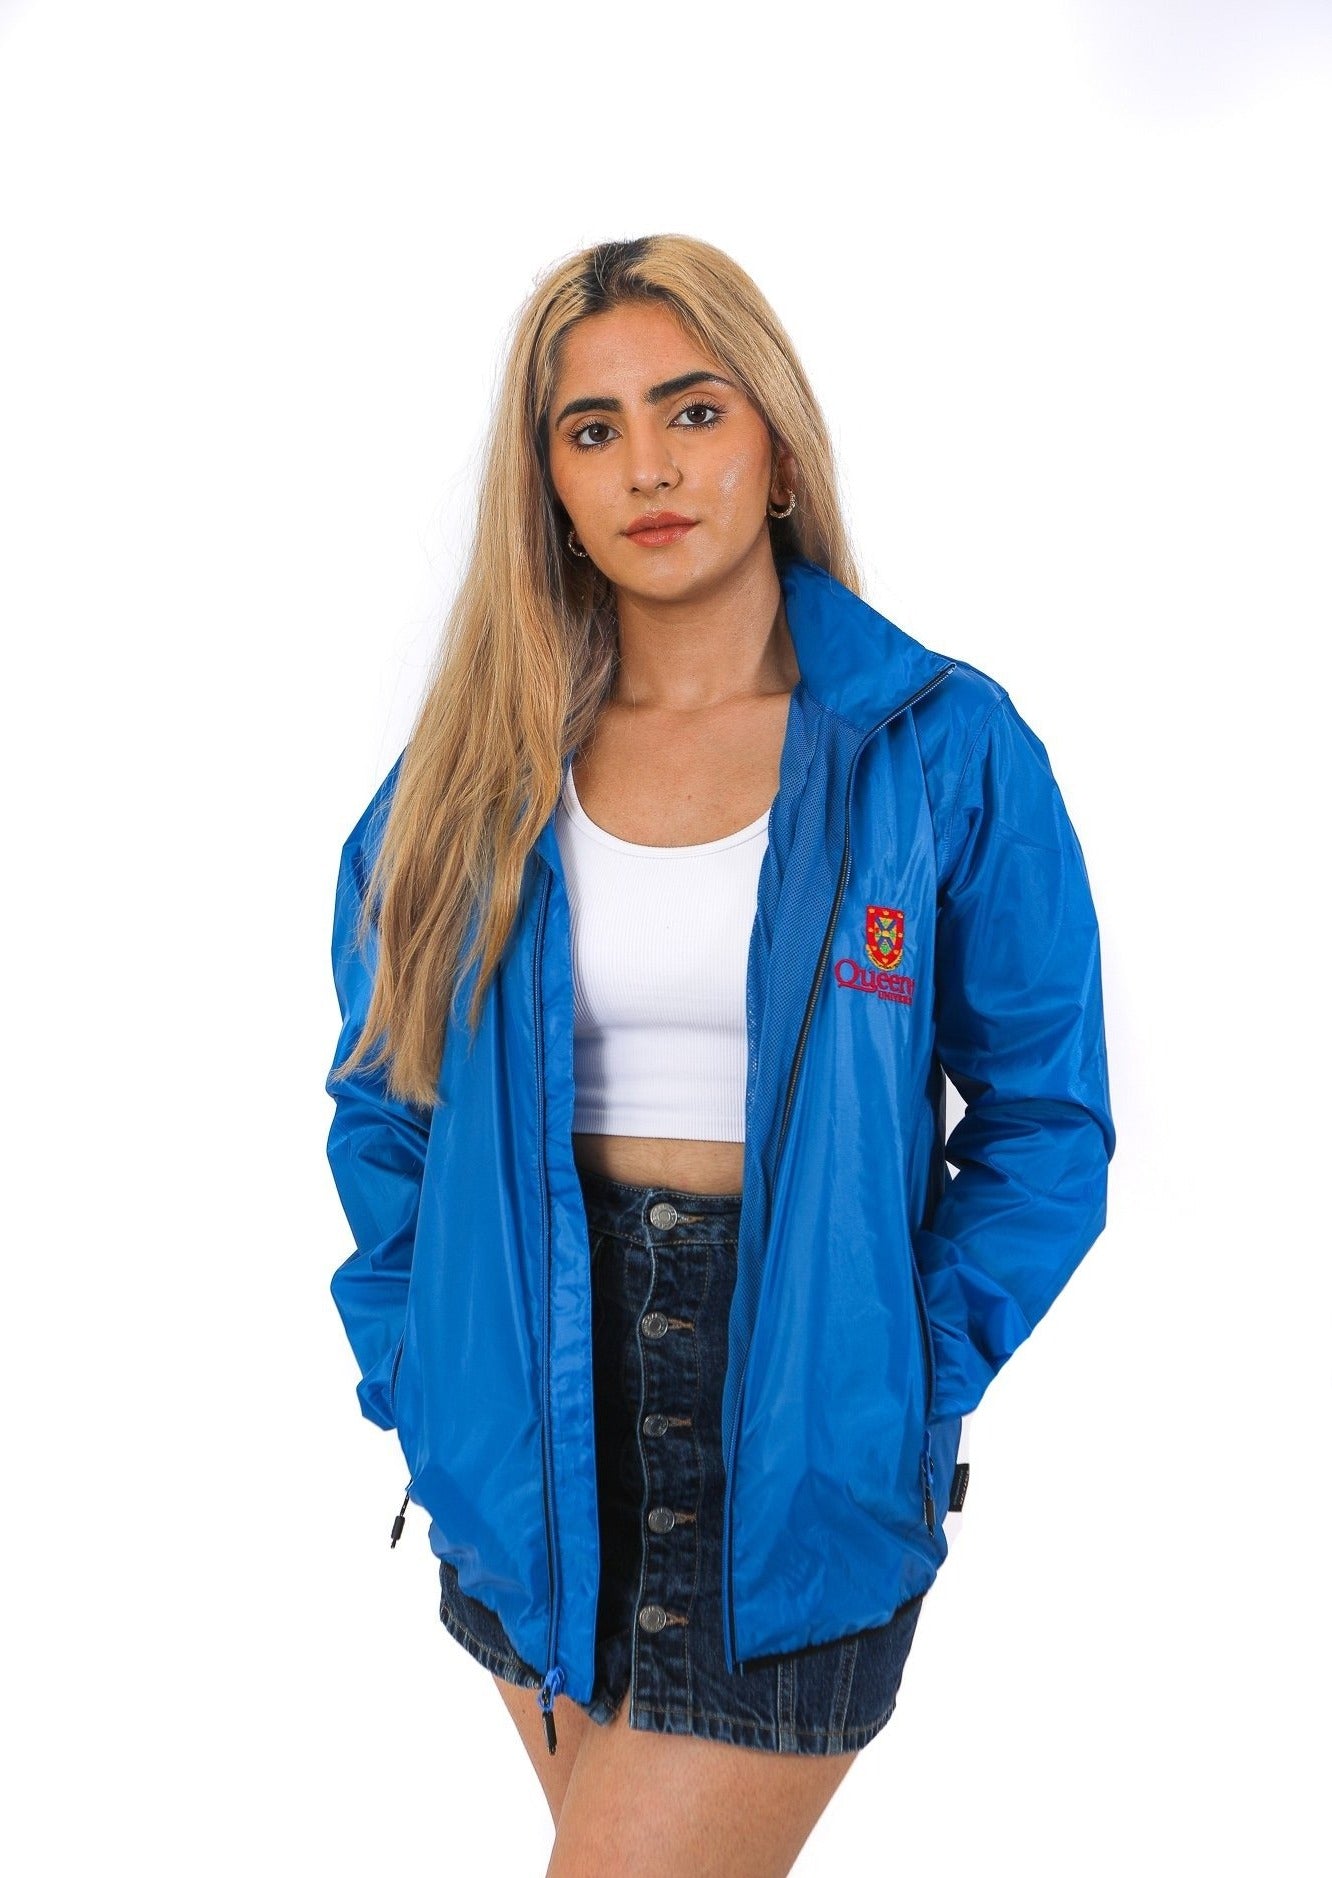 Front of blue zip up rain jacket with red Queen's crest logo